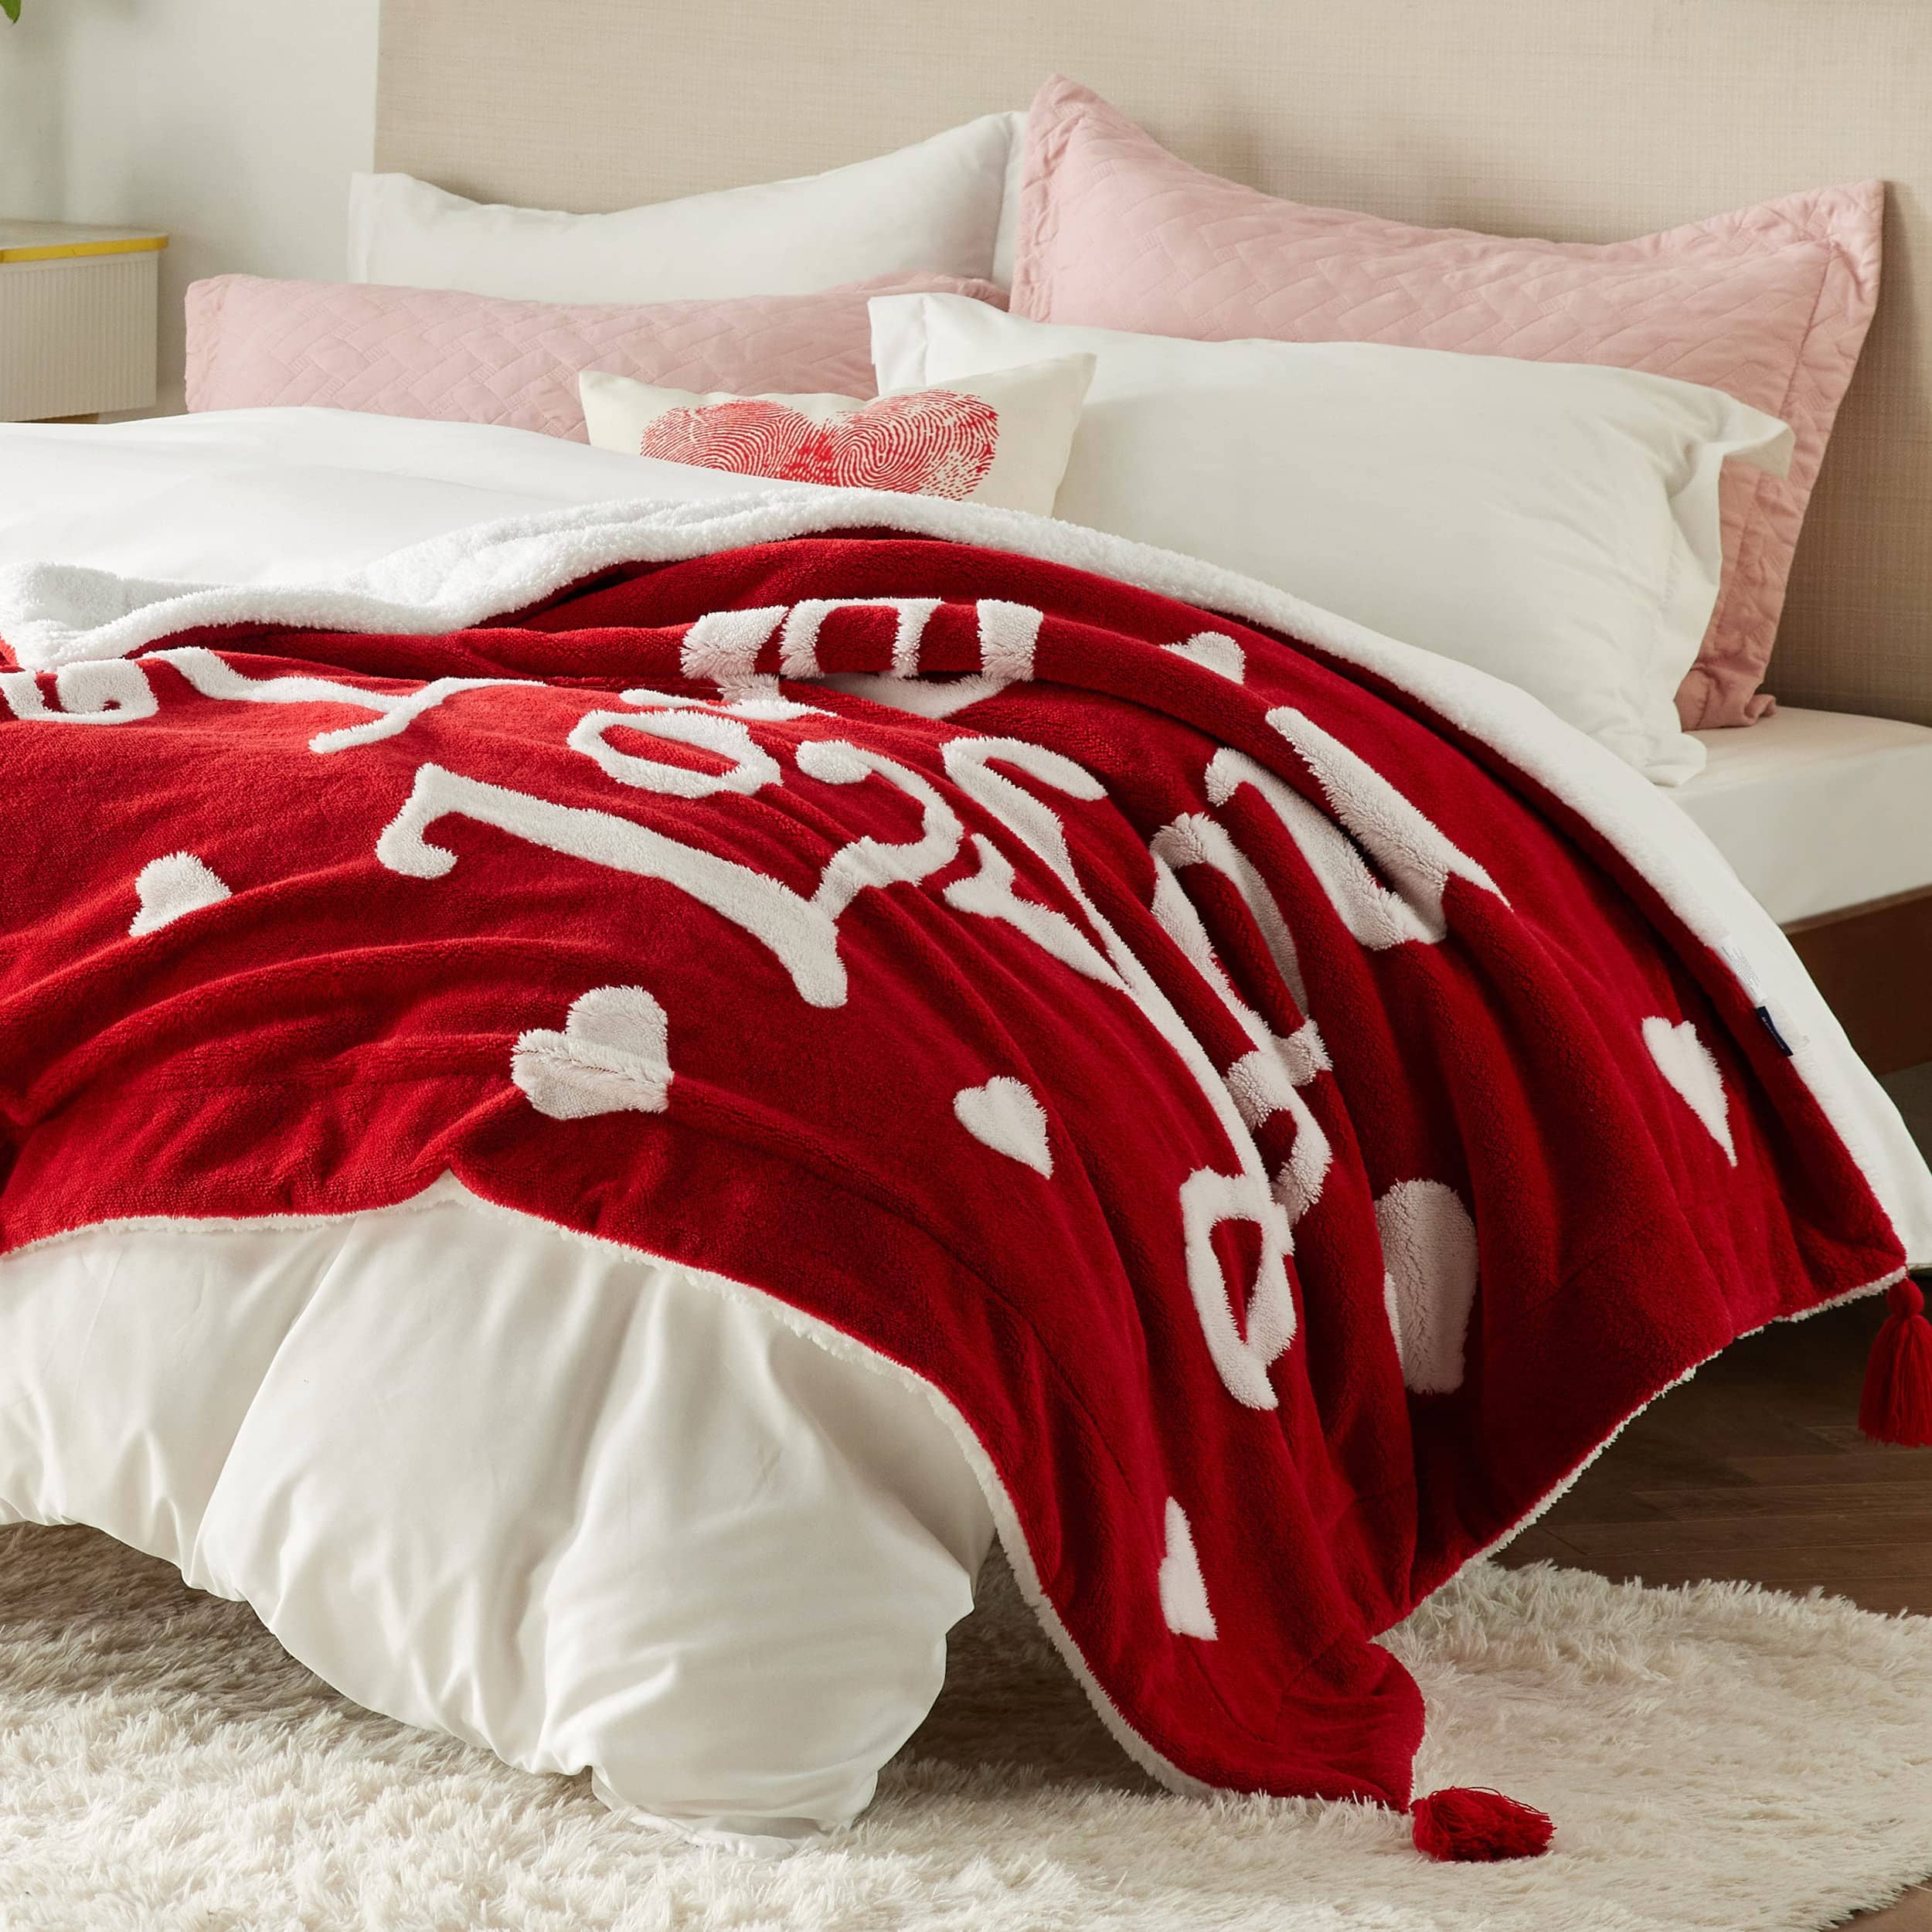 Bedsure Valentine's Day Throw Blanket